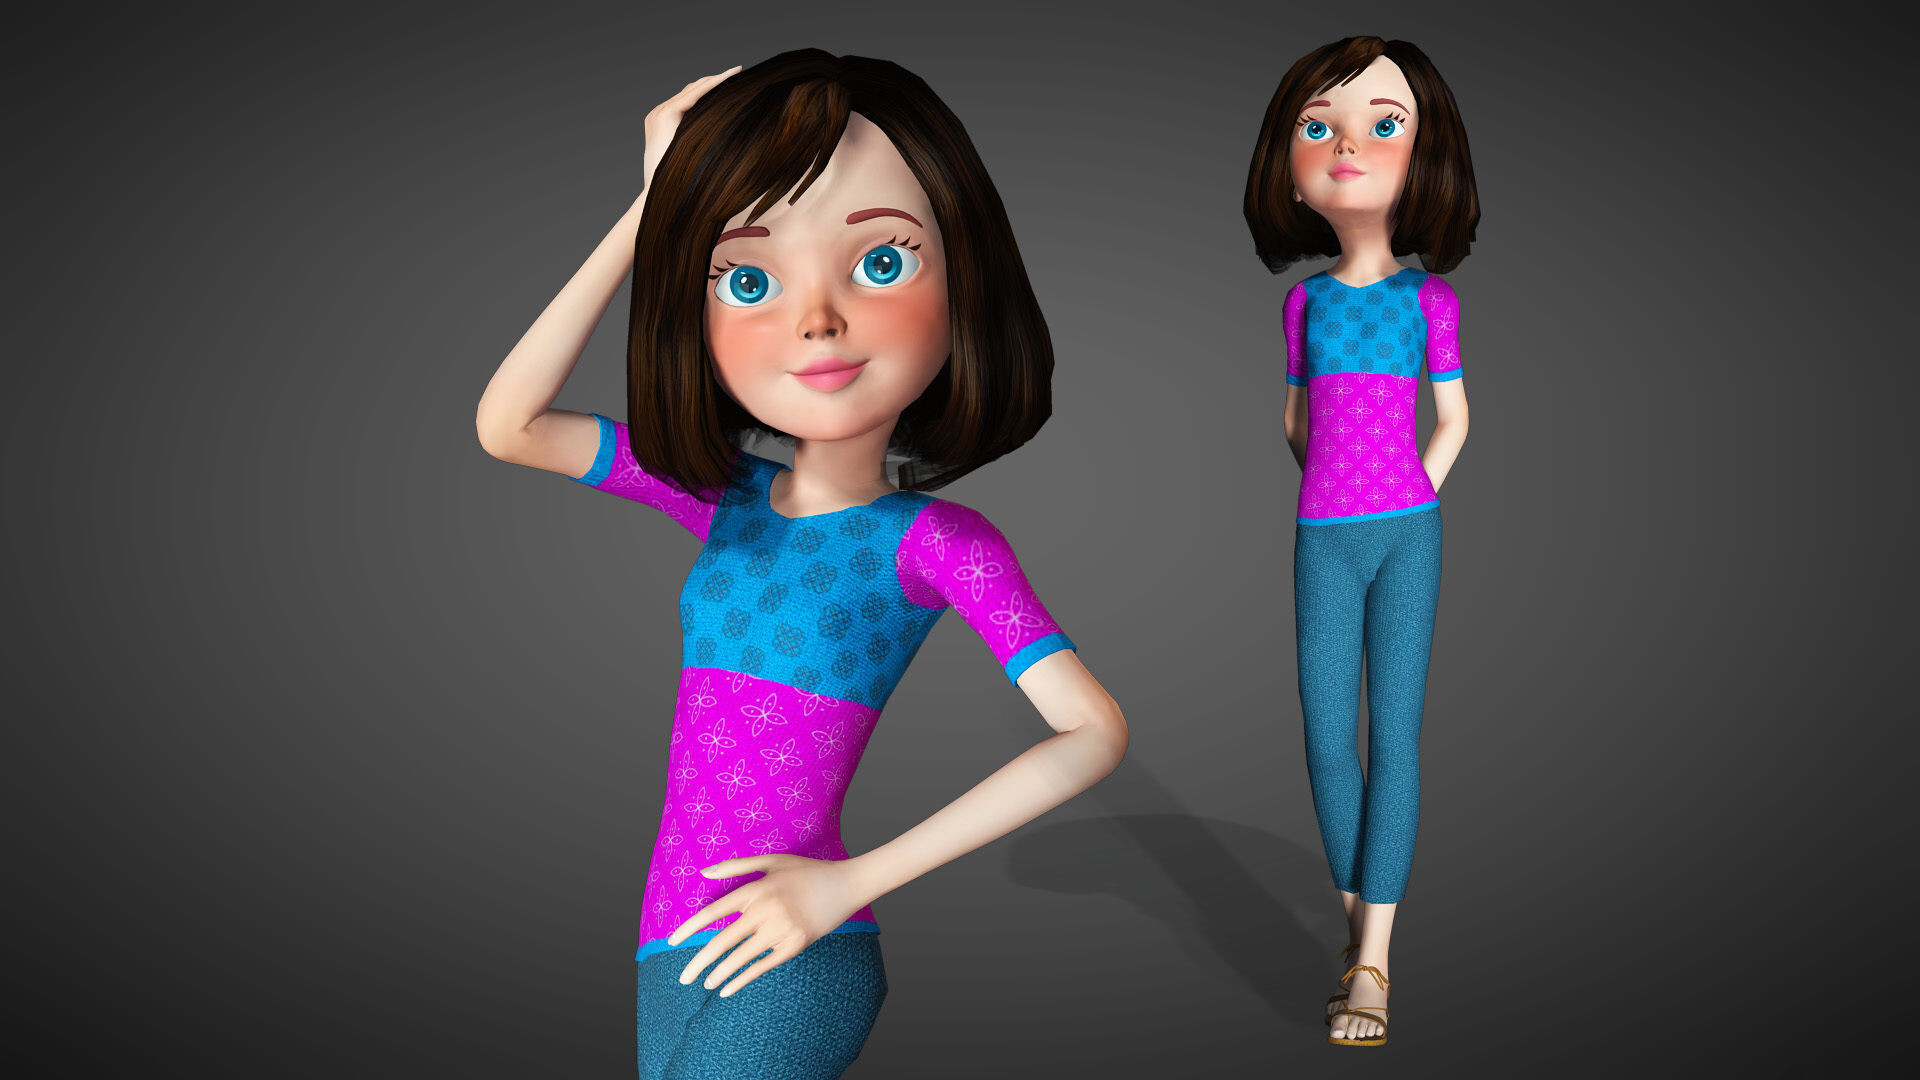 ArtStation - 3D Cartoon Girl Stylish Character Rigged Model